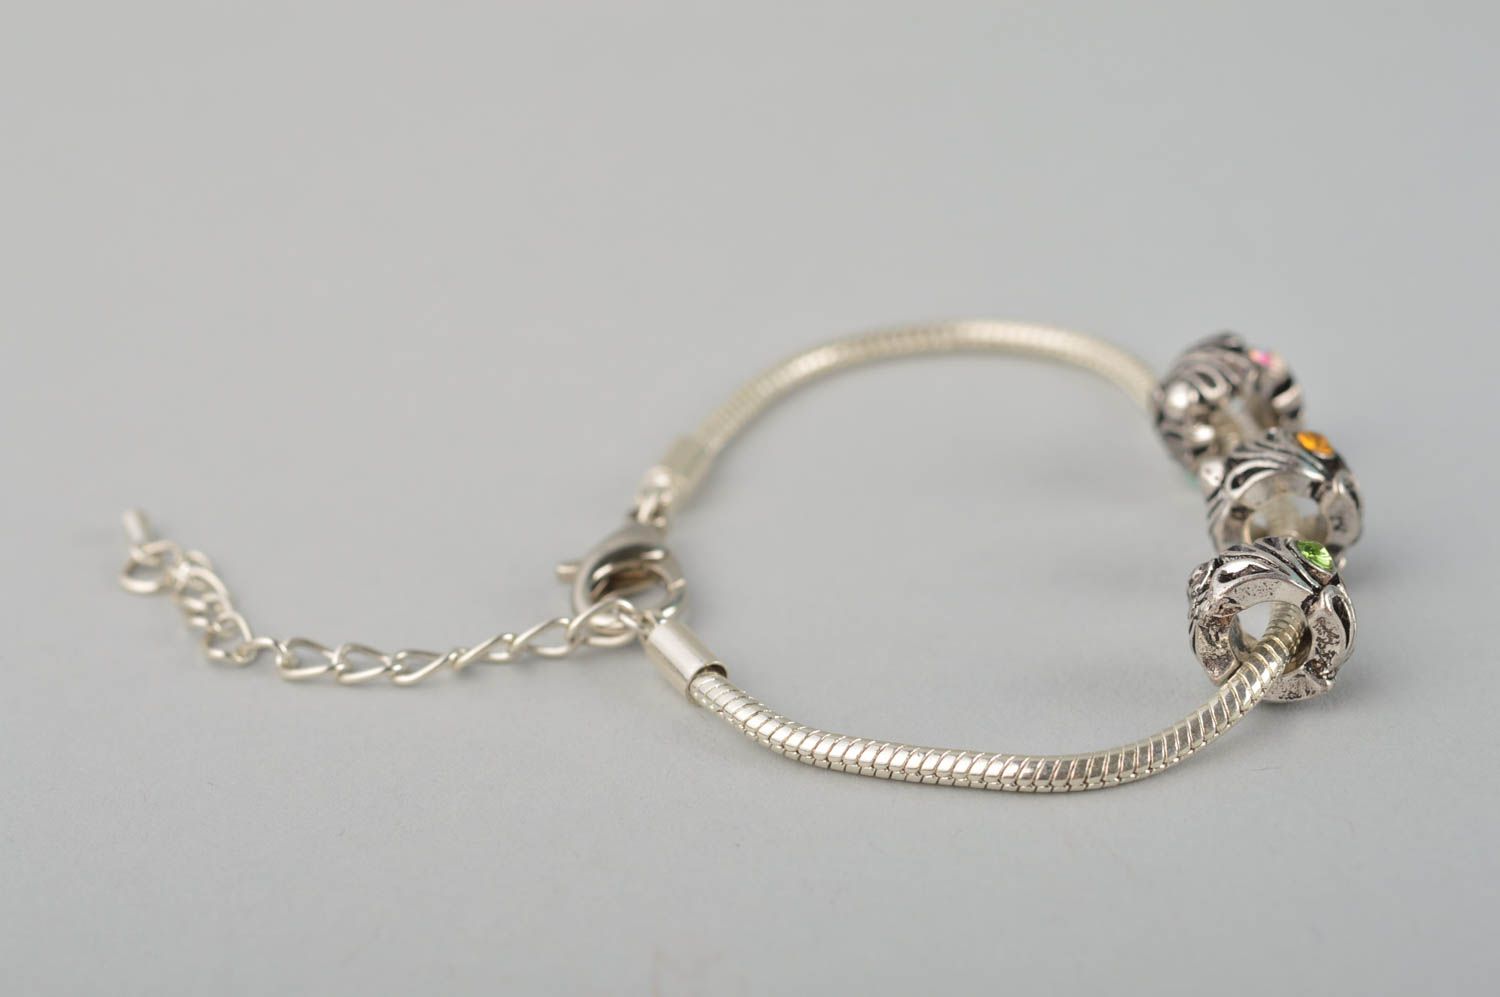 Metal stylish bracelet unusual handmade bracelet wrist accessory gift for her photo 2